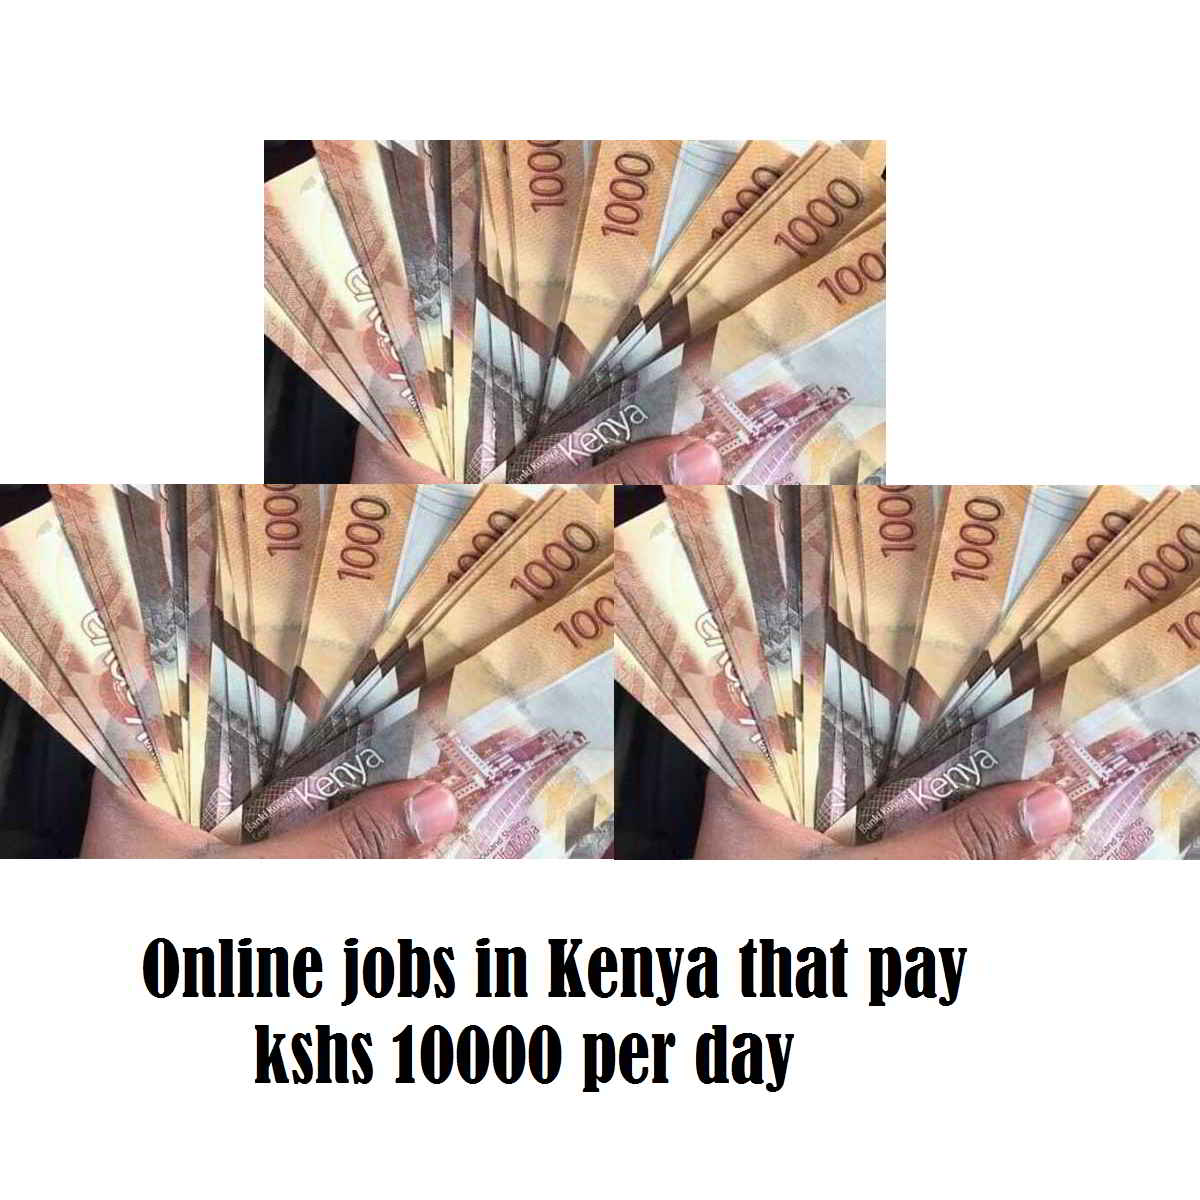 Online jobs in Kenya that pay kshs 10000 per day